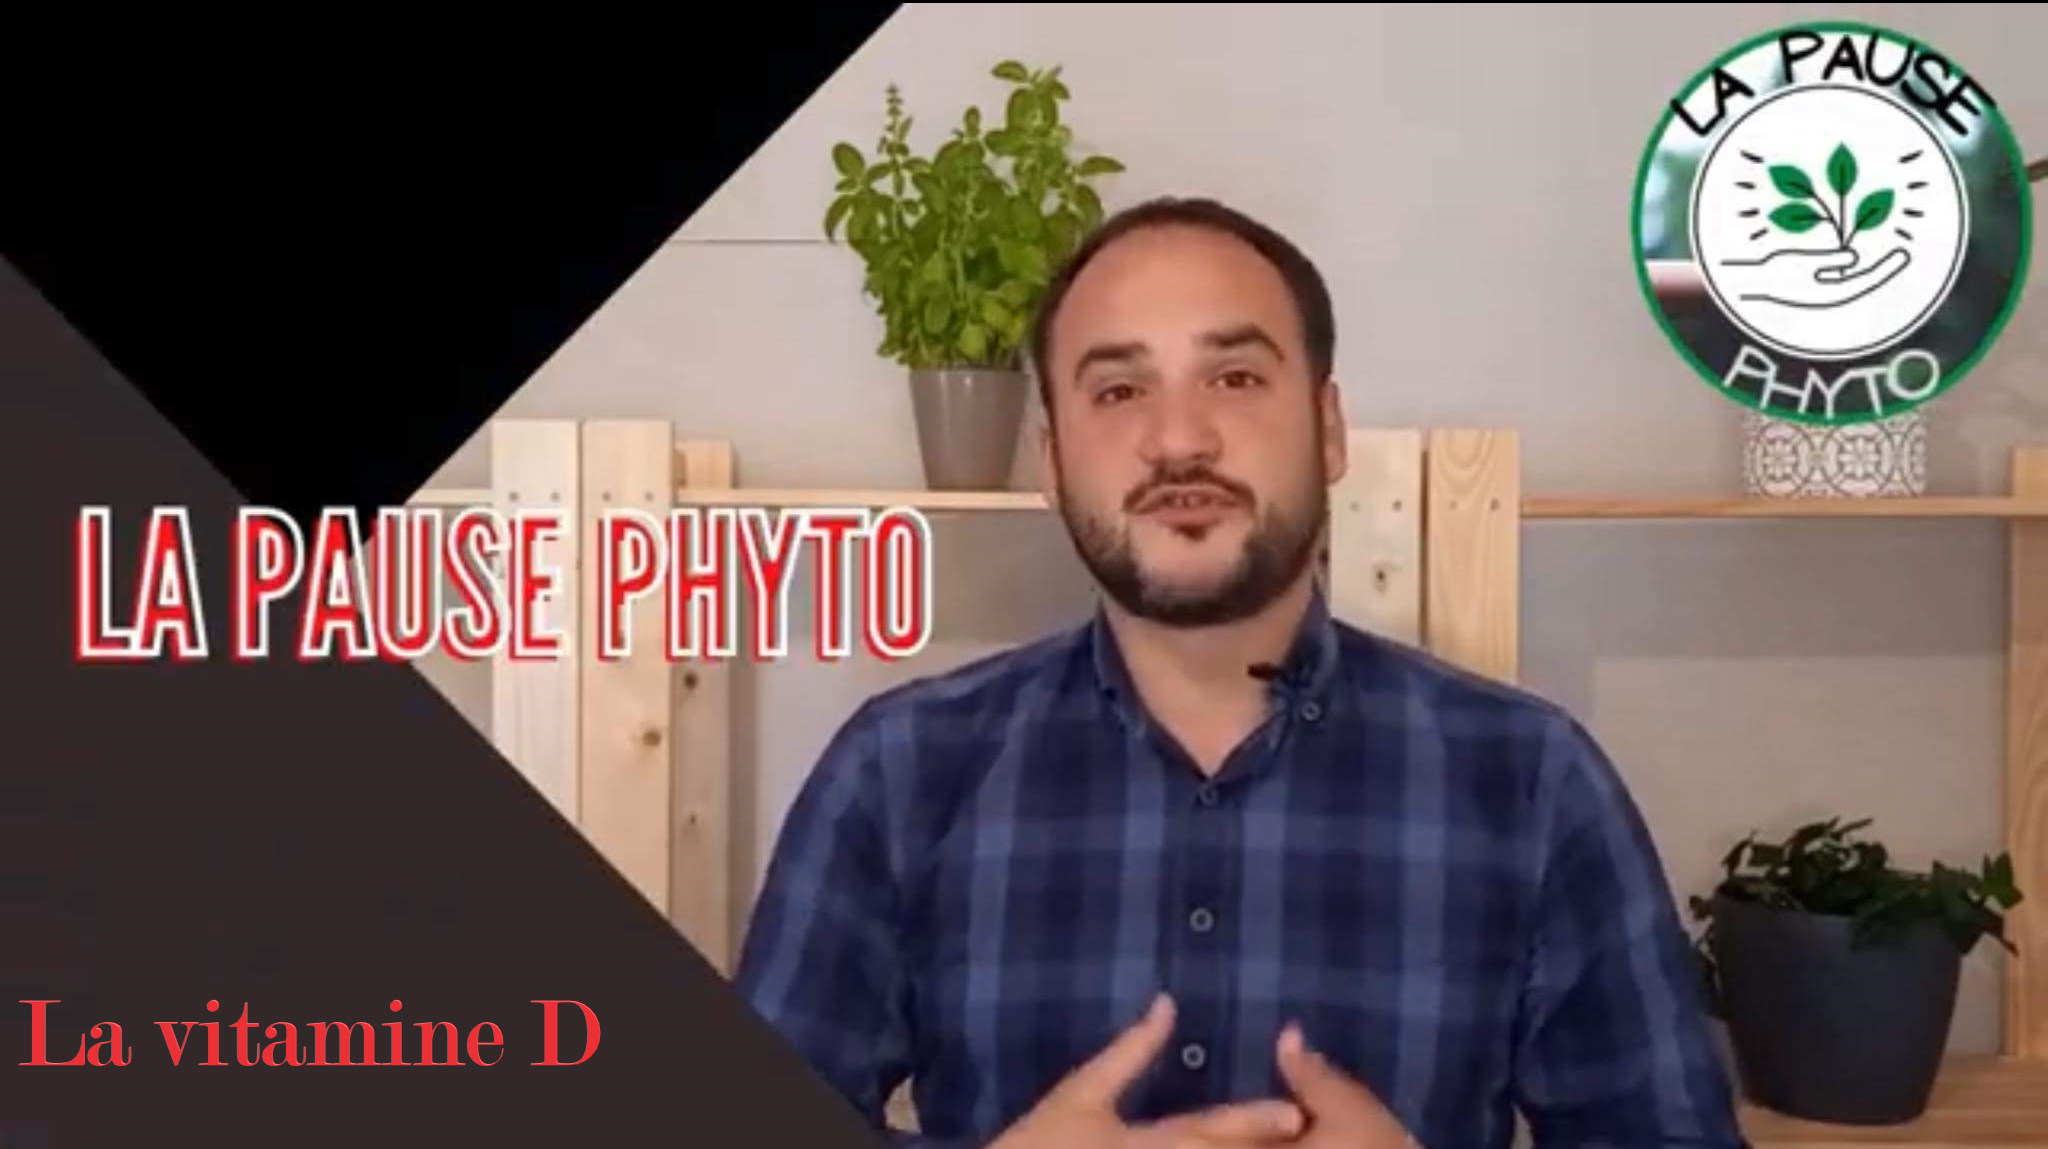 La Pause Phyto "La vitamine D"